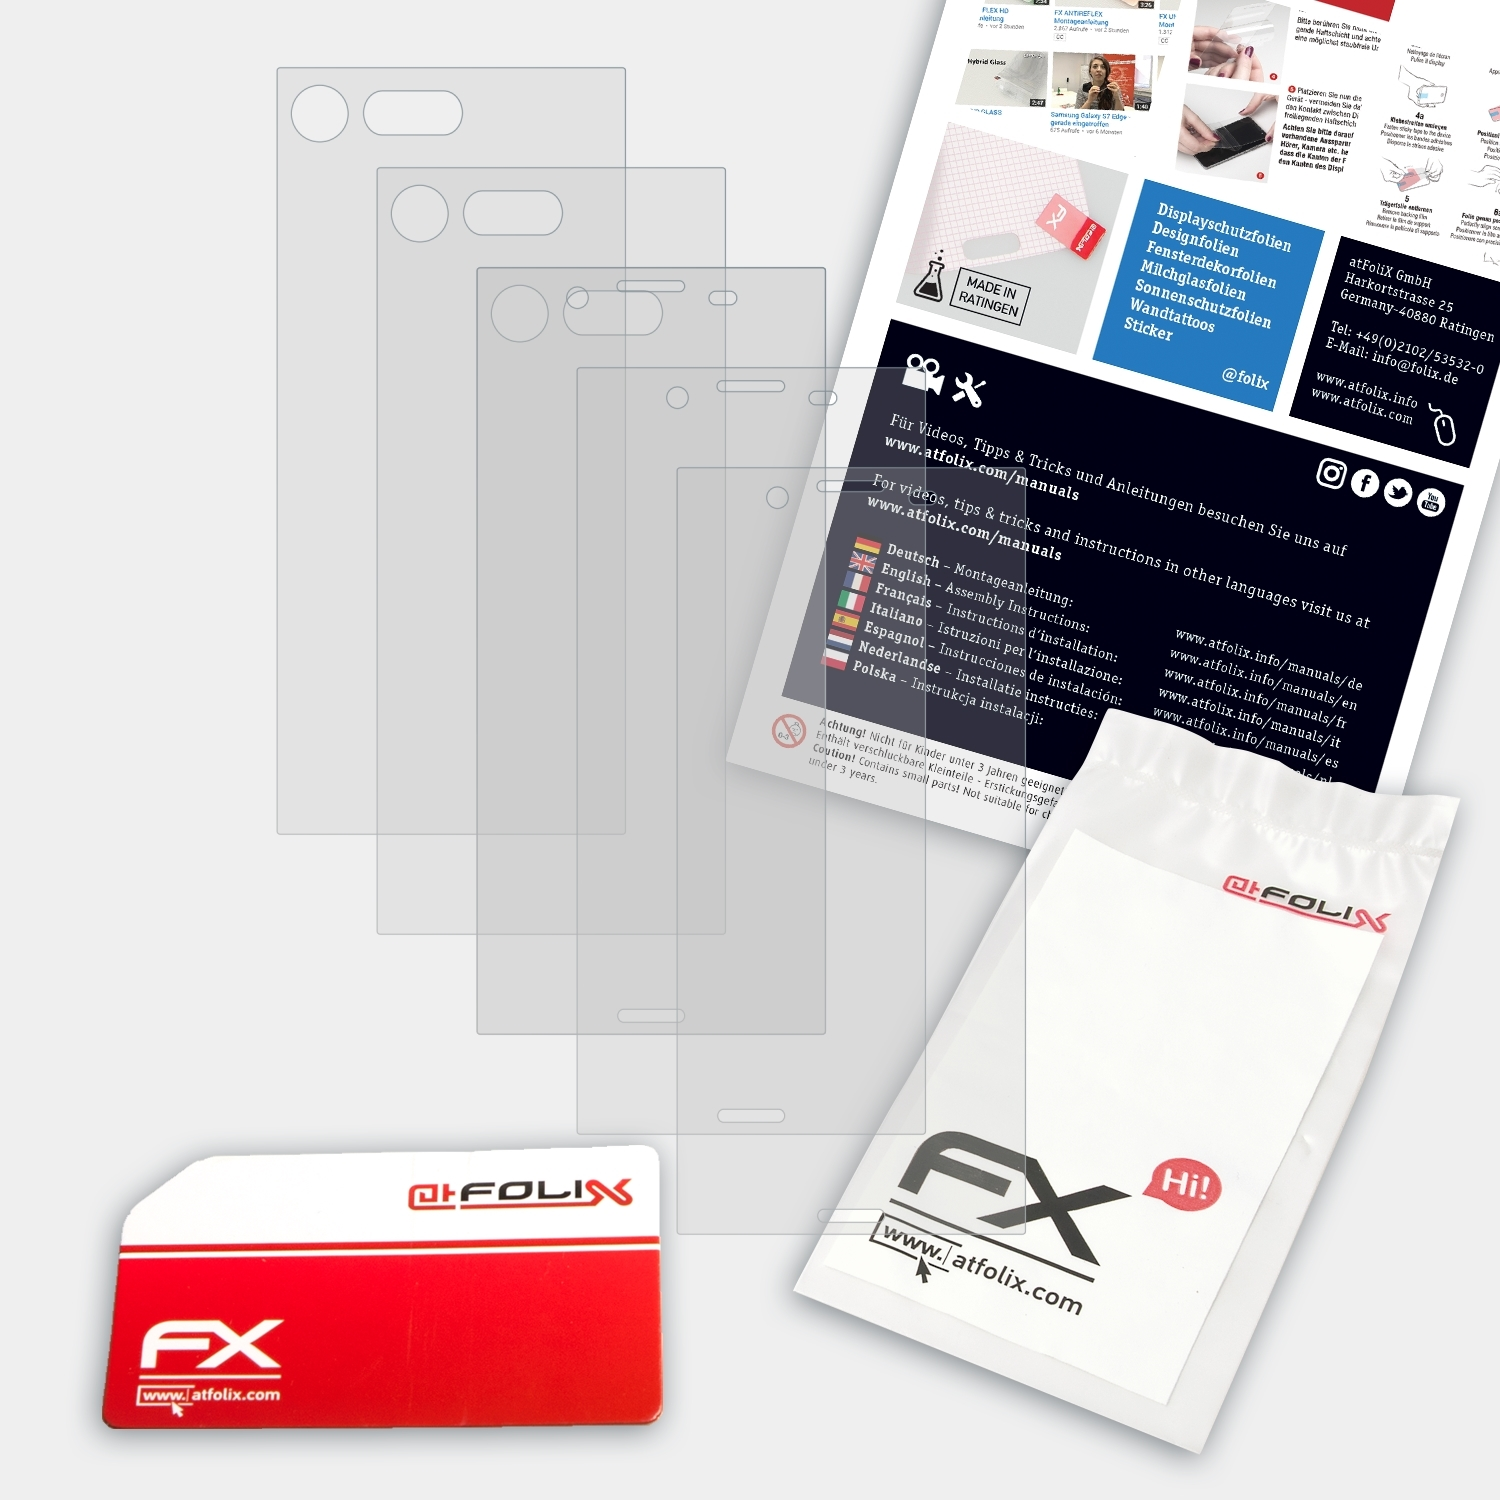 ATFOLIX 3x FX-Antireflex Displayschutz(für X Compact) Xperia Sony